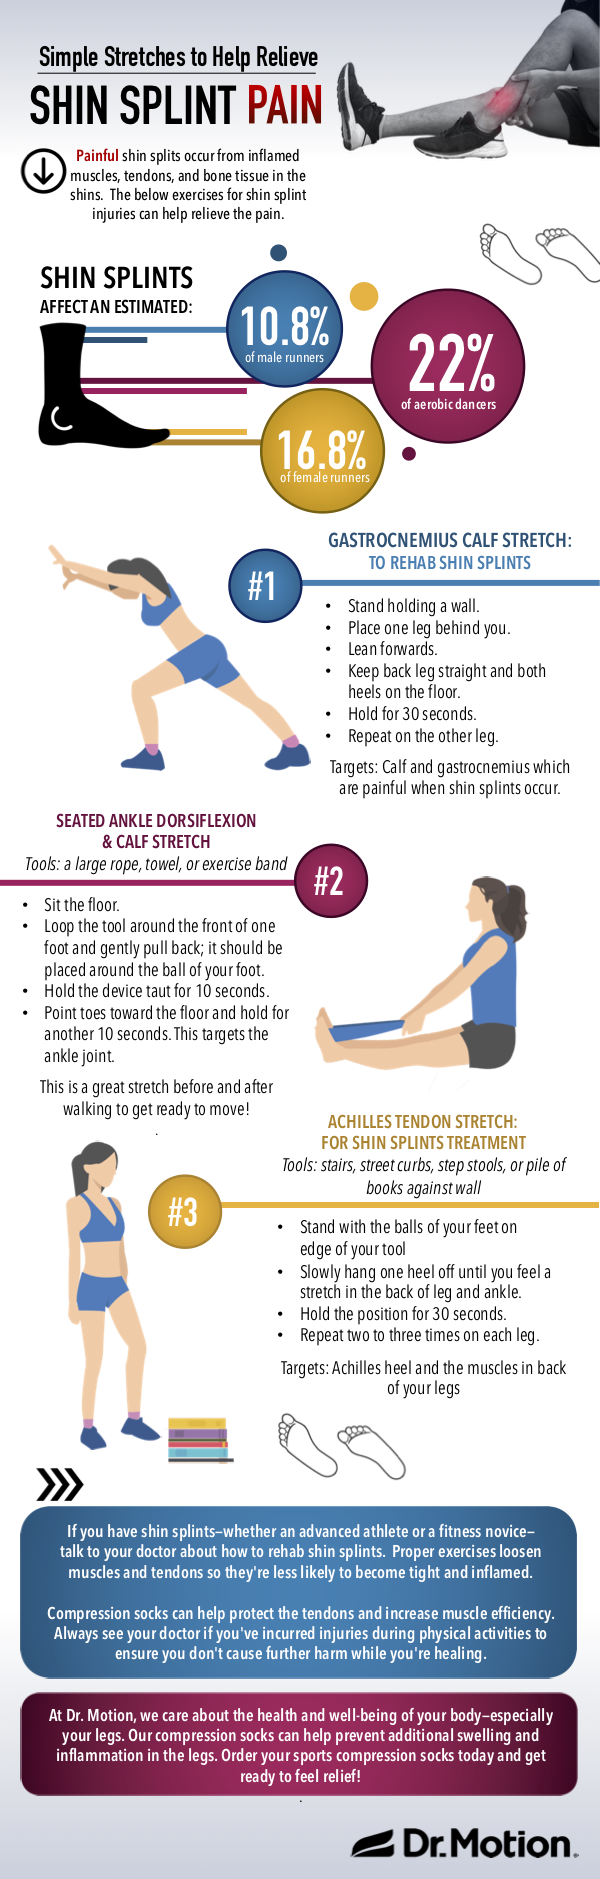 Calf Stretches Everyone Needs: How to Do Them Correctly